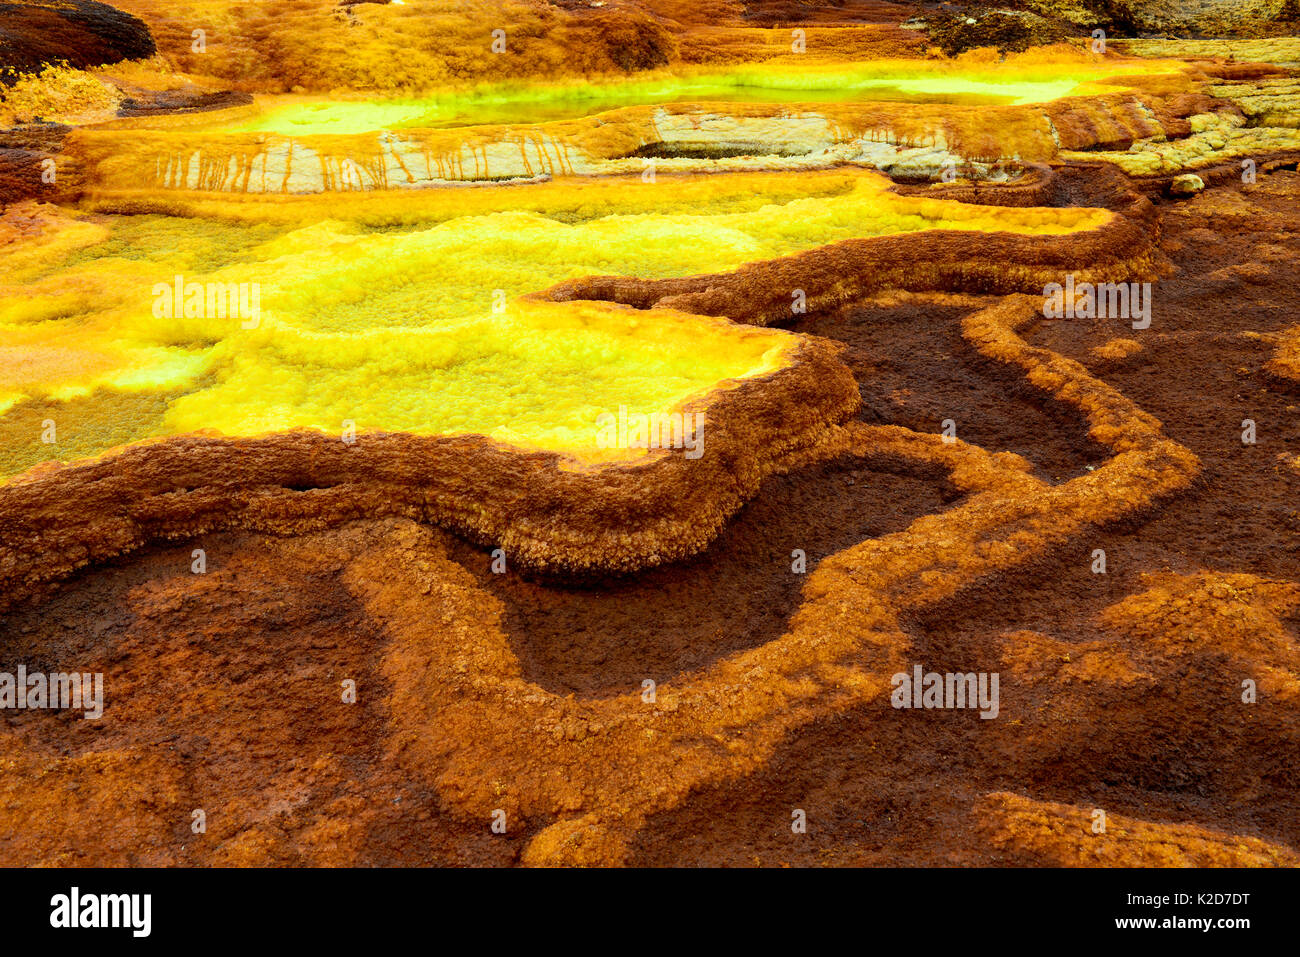 Lakes and sulfur fumaroles with potassium salt mineral deposits, Dallol hydrothermal area of Lake Assale. Danakil Depression, Afar Region, Ethiopia, Africa. November 2014. Stock Photo